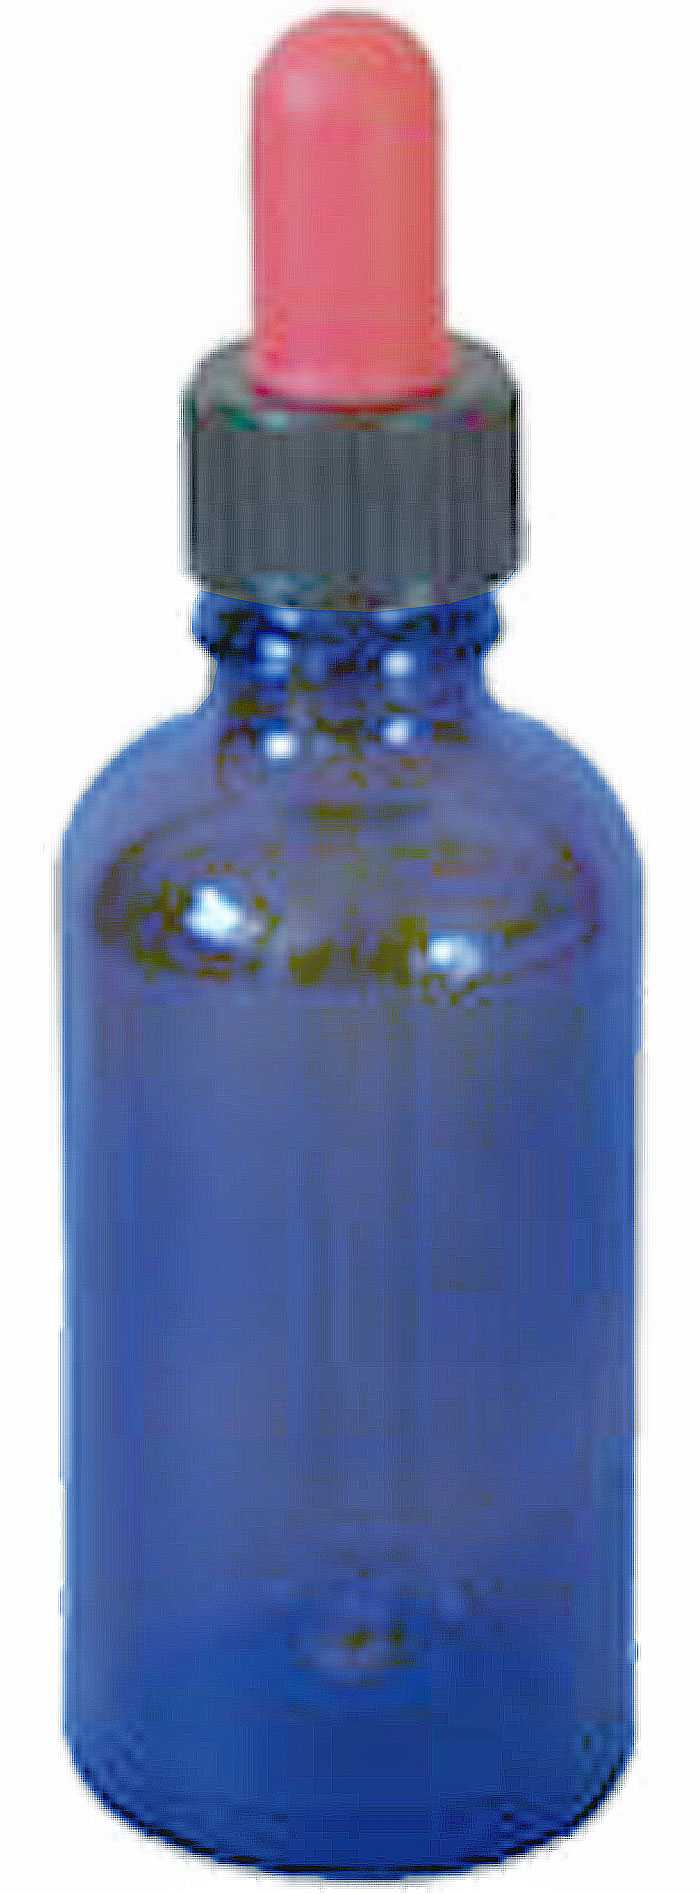 Eye drop bottle blue glass with pipette - 50ml